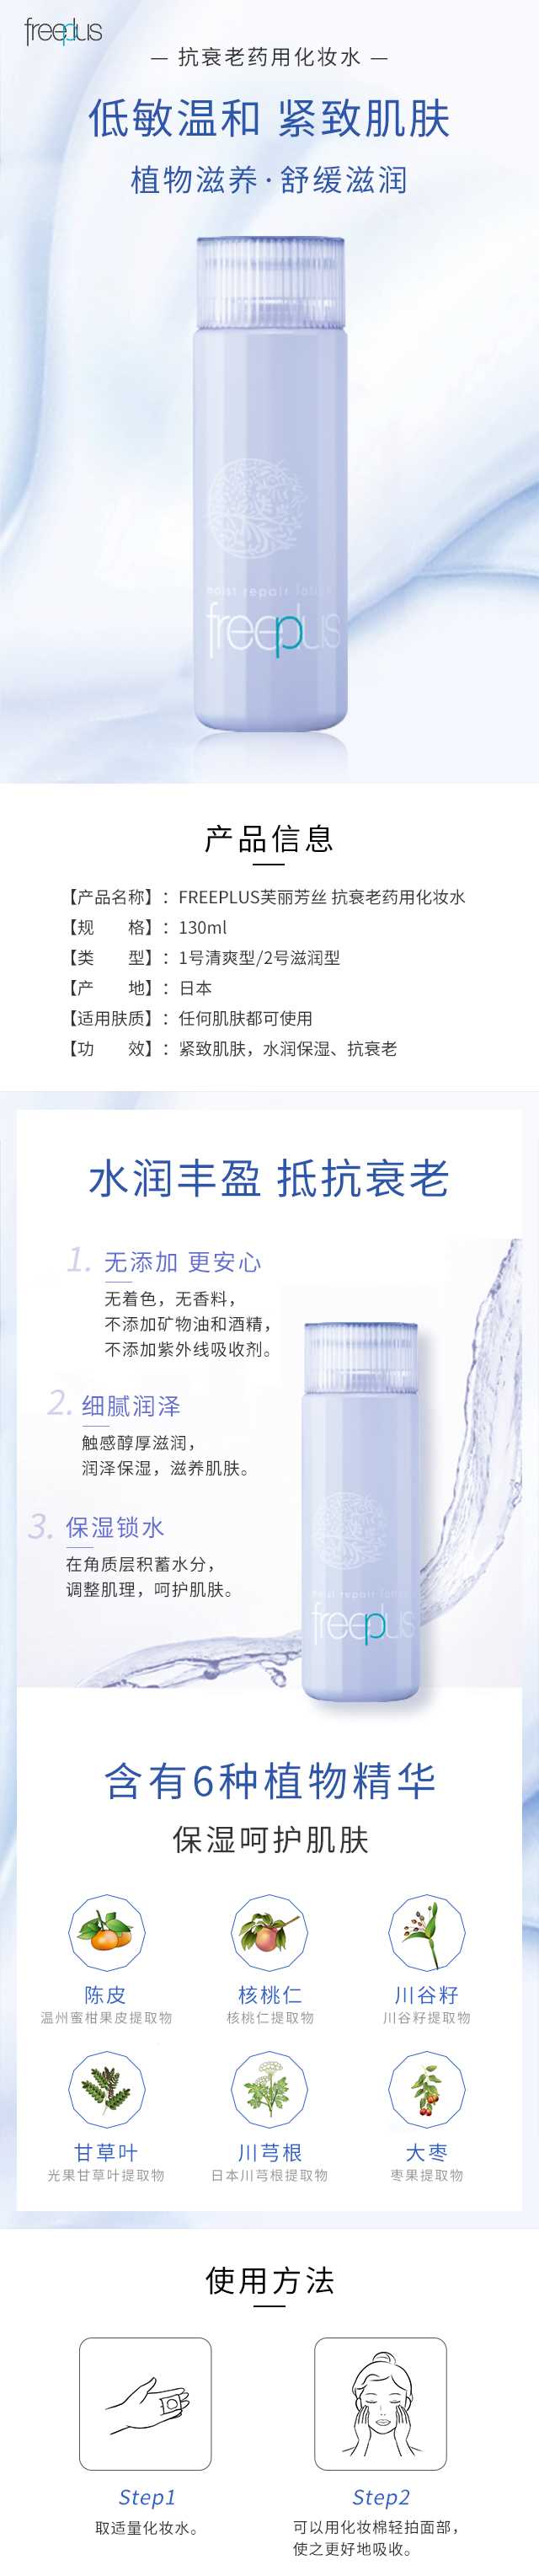 FREEPLUS芙丽芳丝-抗衰老药用化妆水130ml_01.jpg